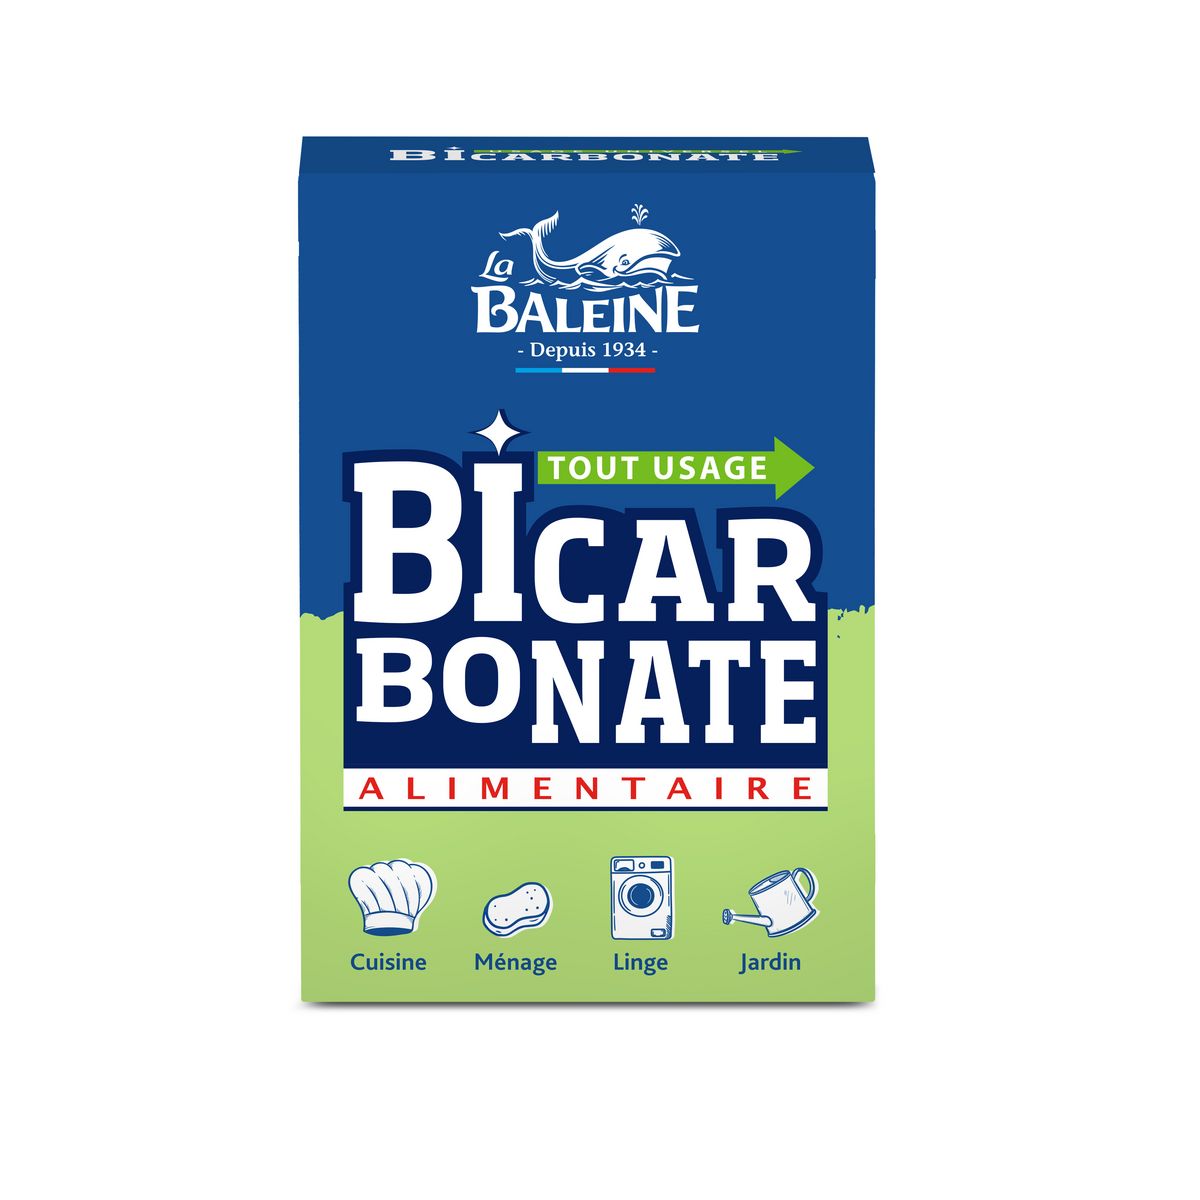 LA BALEINE Bicarbonate alimentaire usage universel 800g